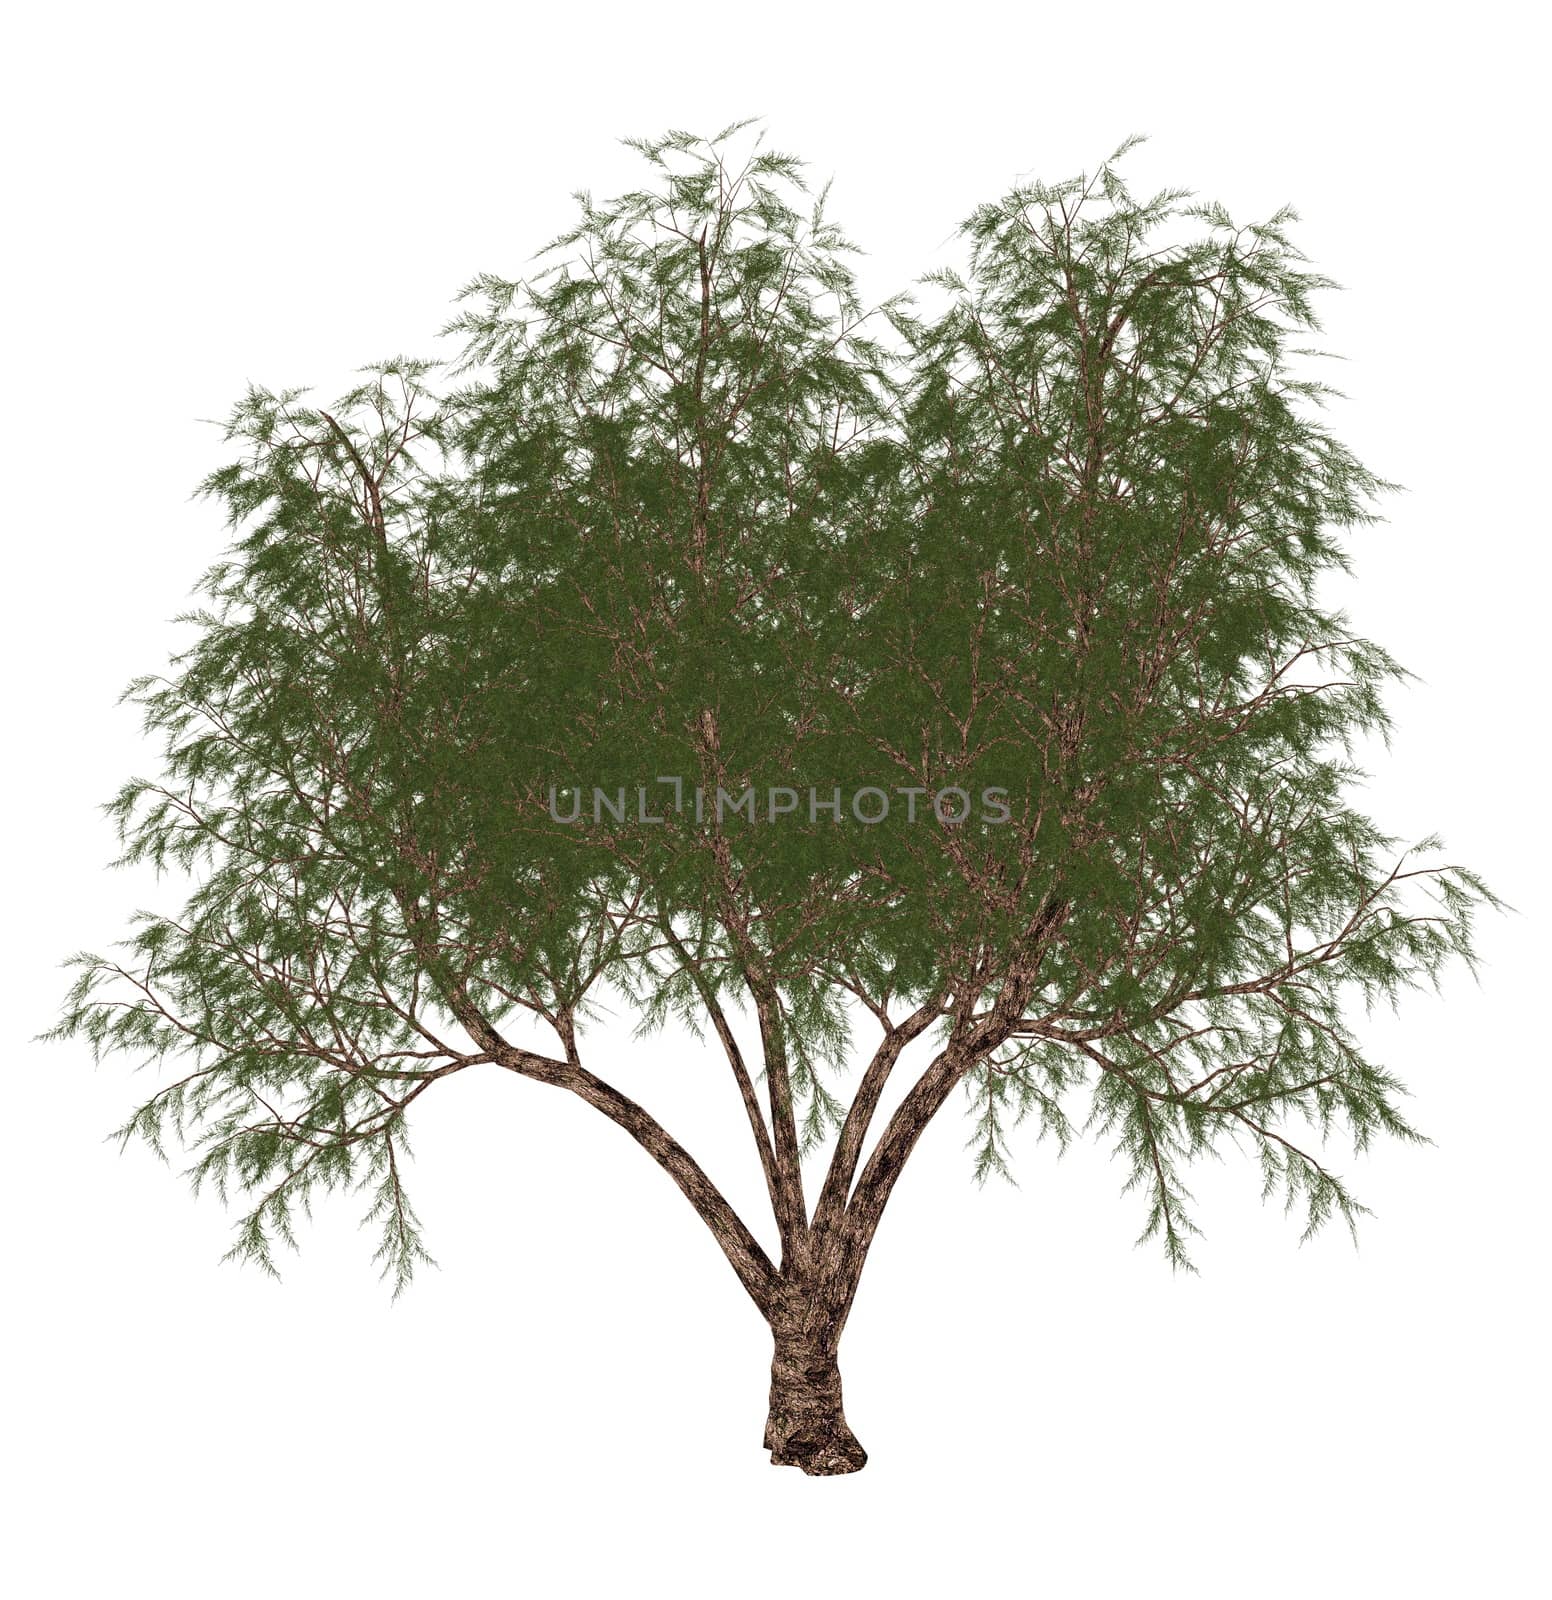 French tamarisk, tamarix gallica, tree - 3D render by Elenaphotos21